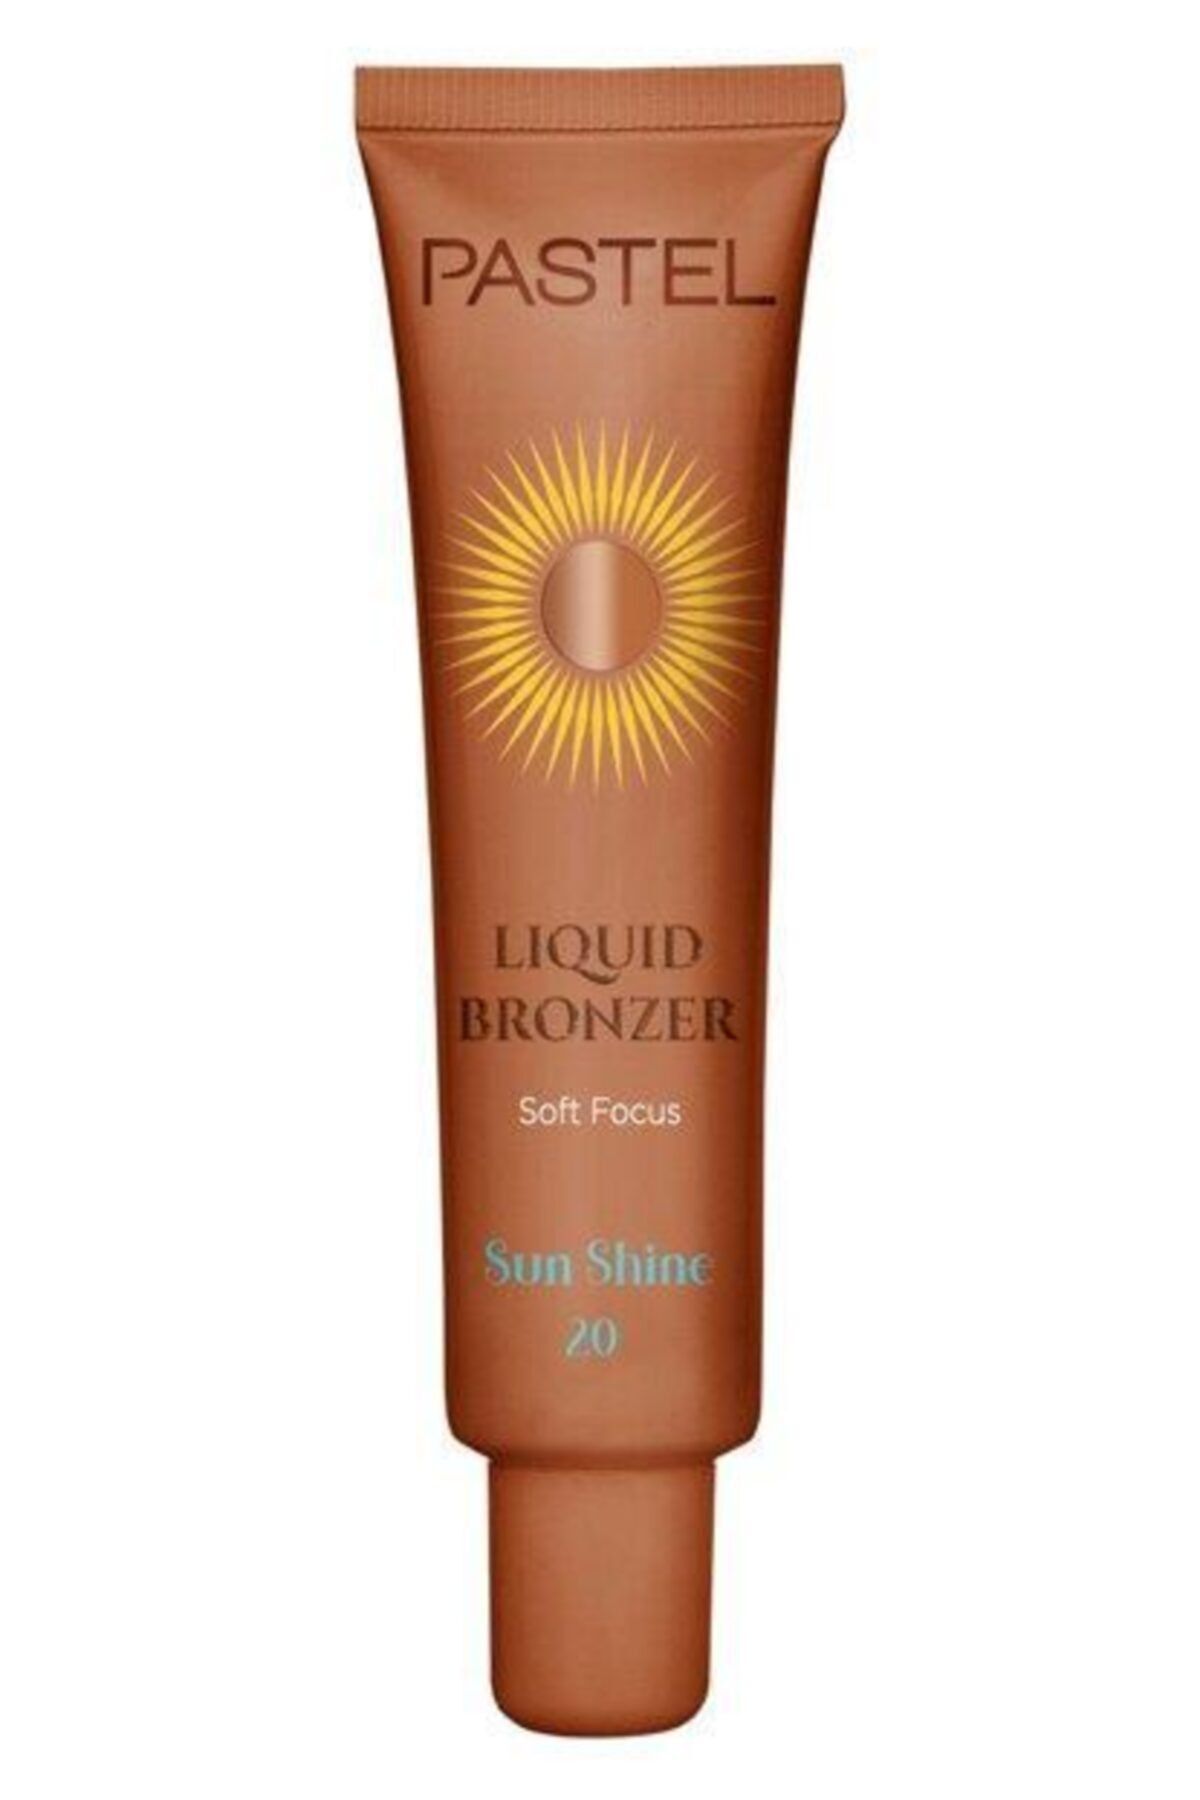 Pastel Liquid Bronzer Soft Focus Sun Shine - Likid Bronzlastirici Sunshine